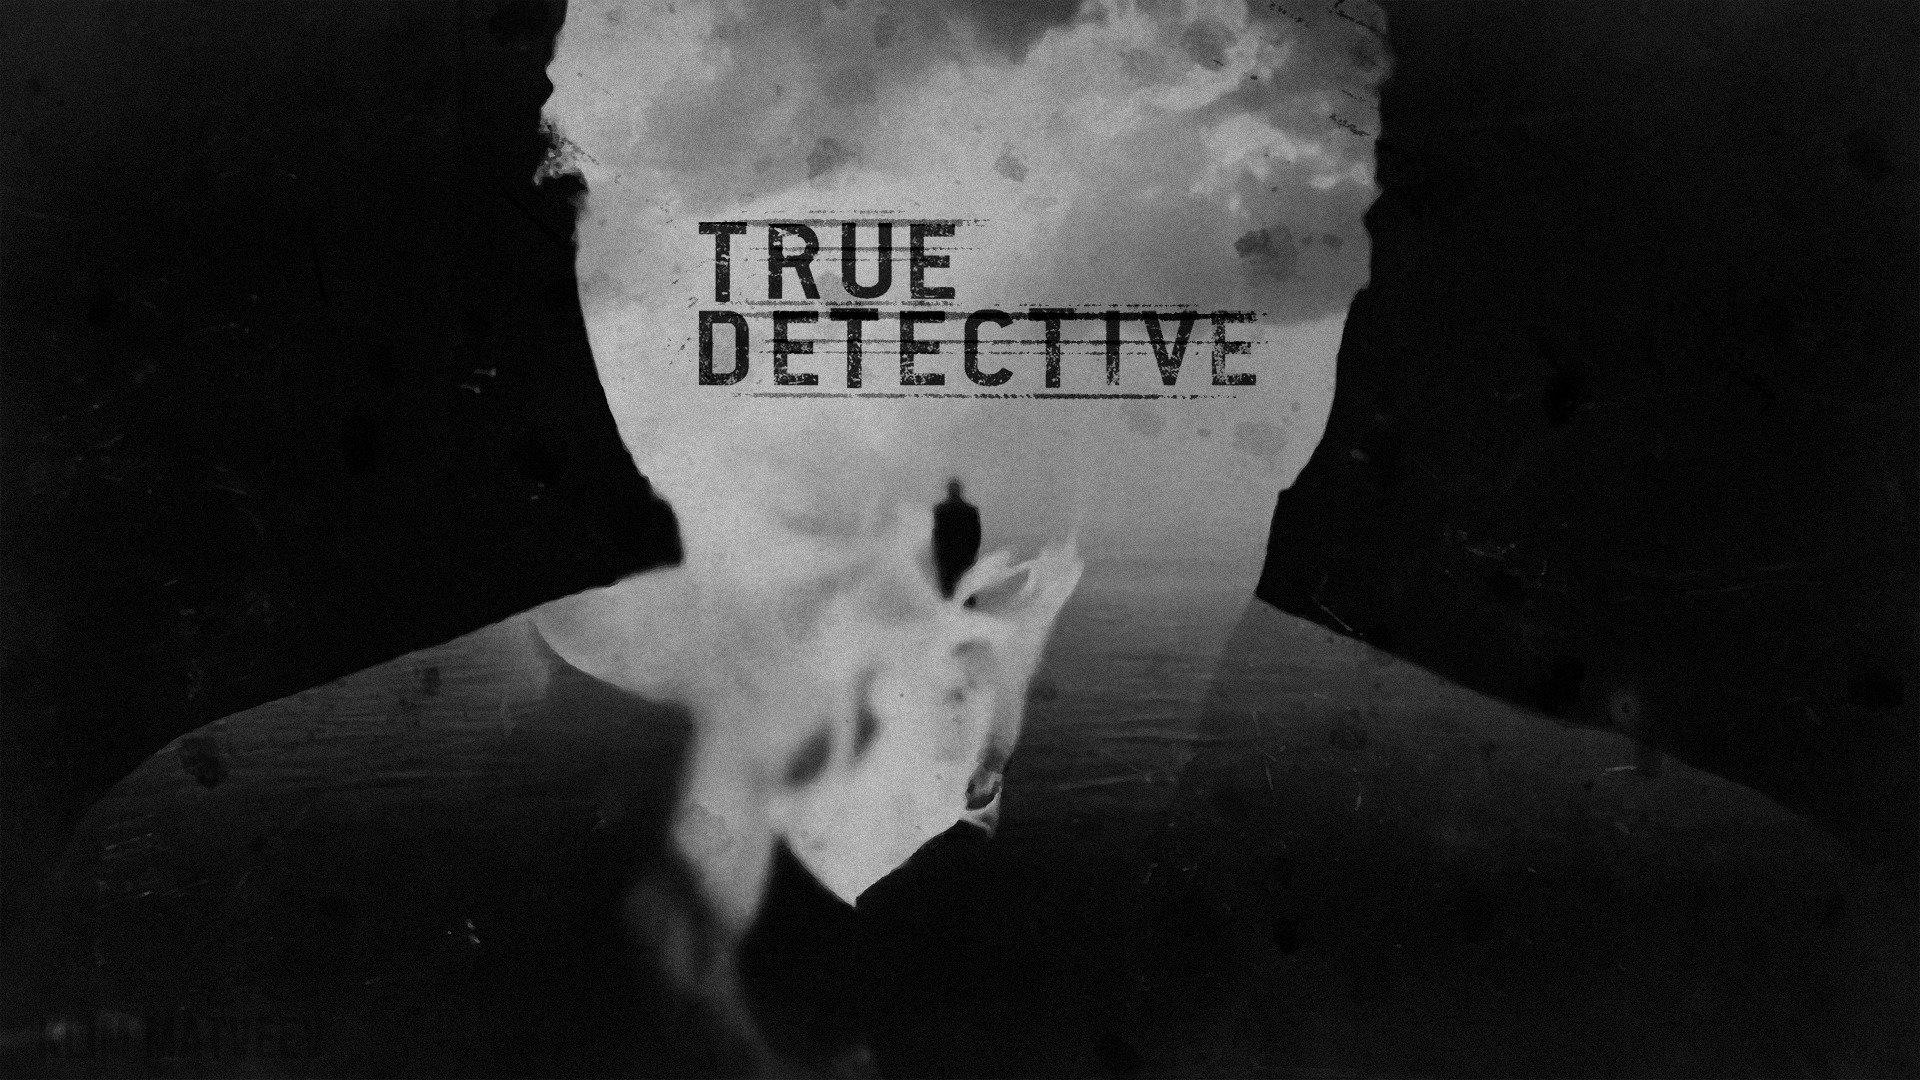 True Detective wallpaper 1920x1080 Full HD (1080p) desktop background